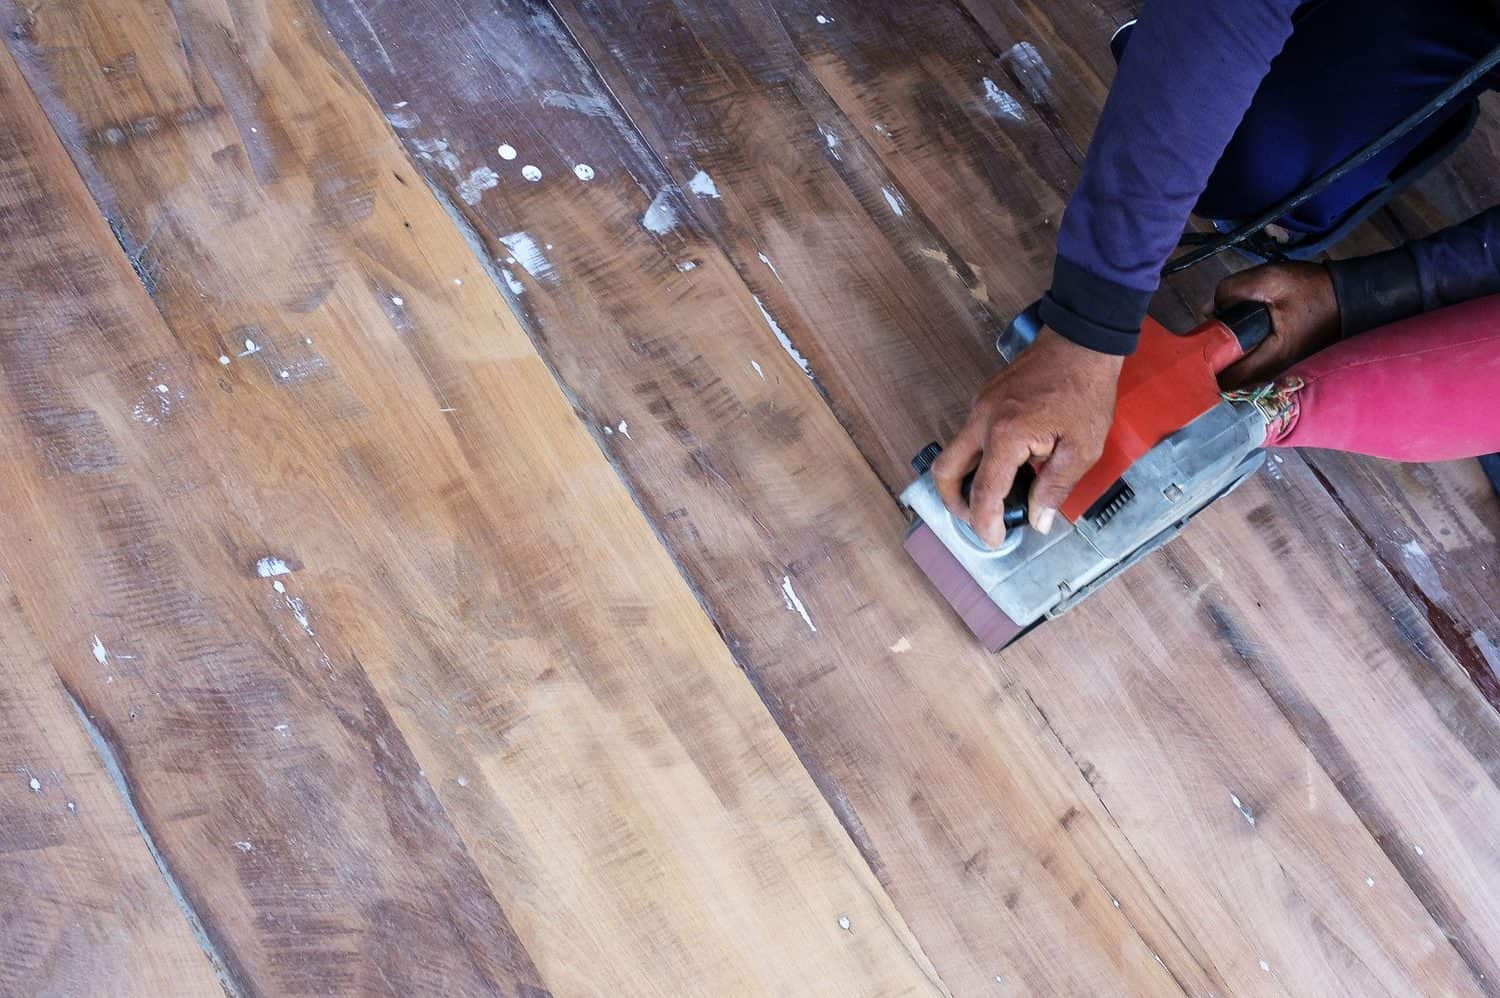 How To Bleach Hardwood Floors, Bleach On Laminate Flooring